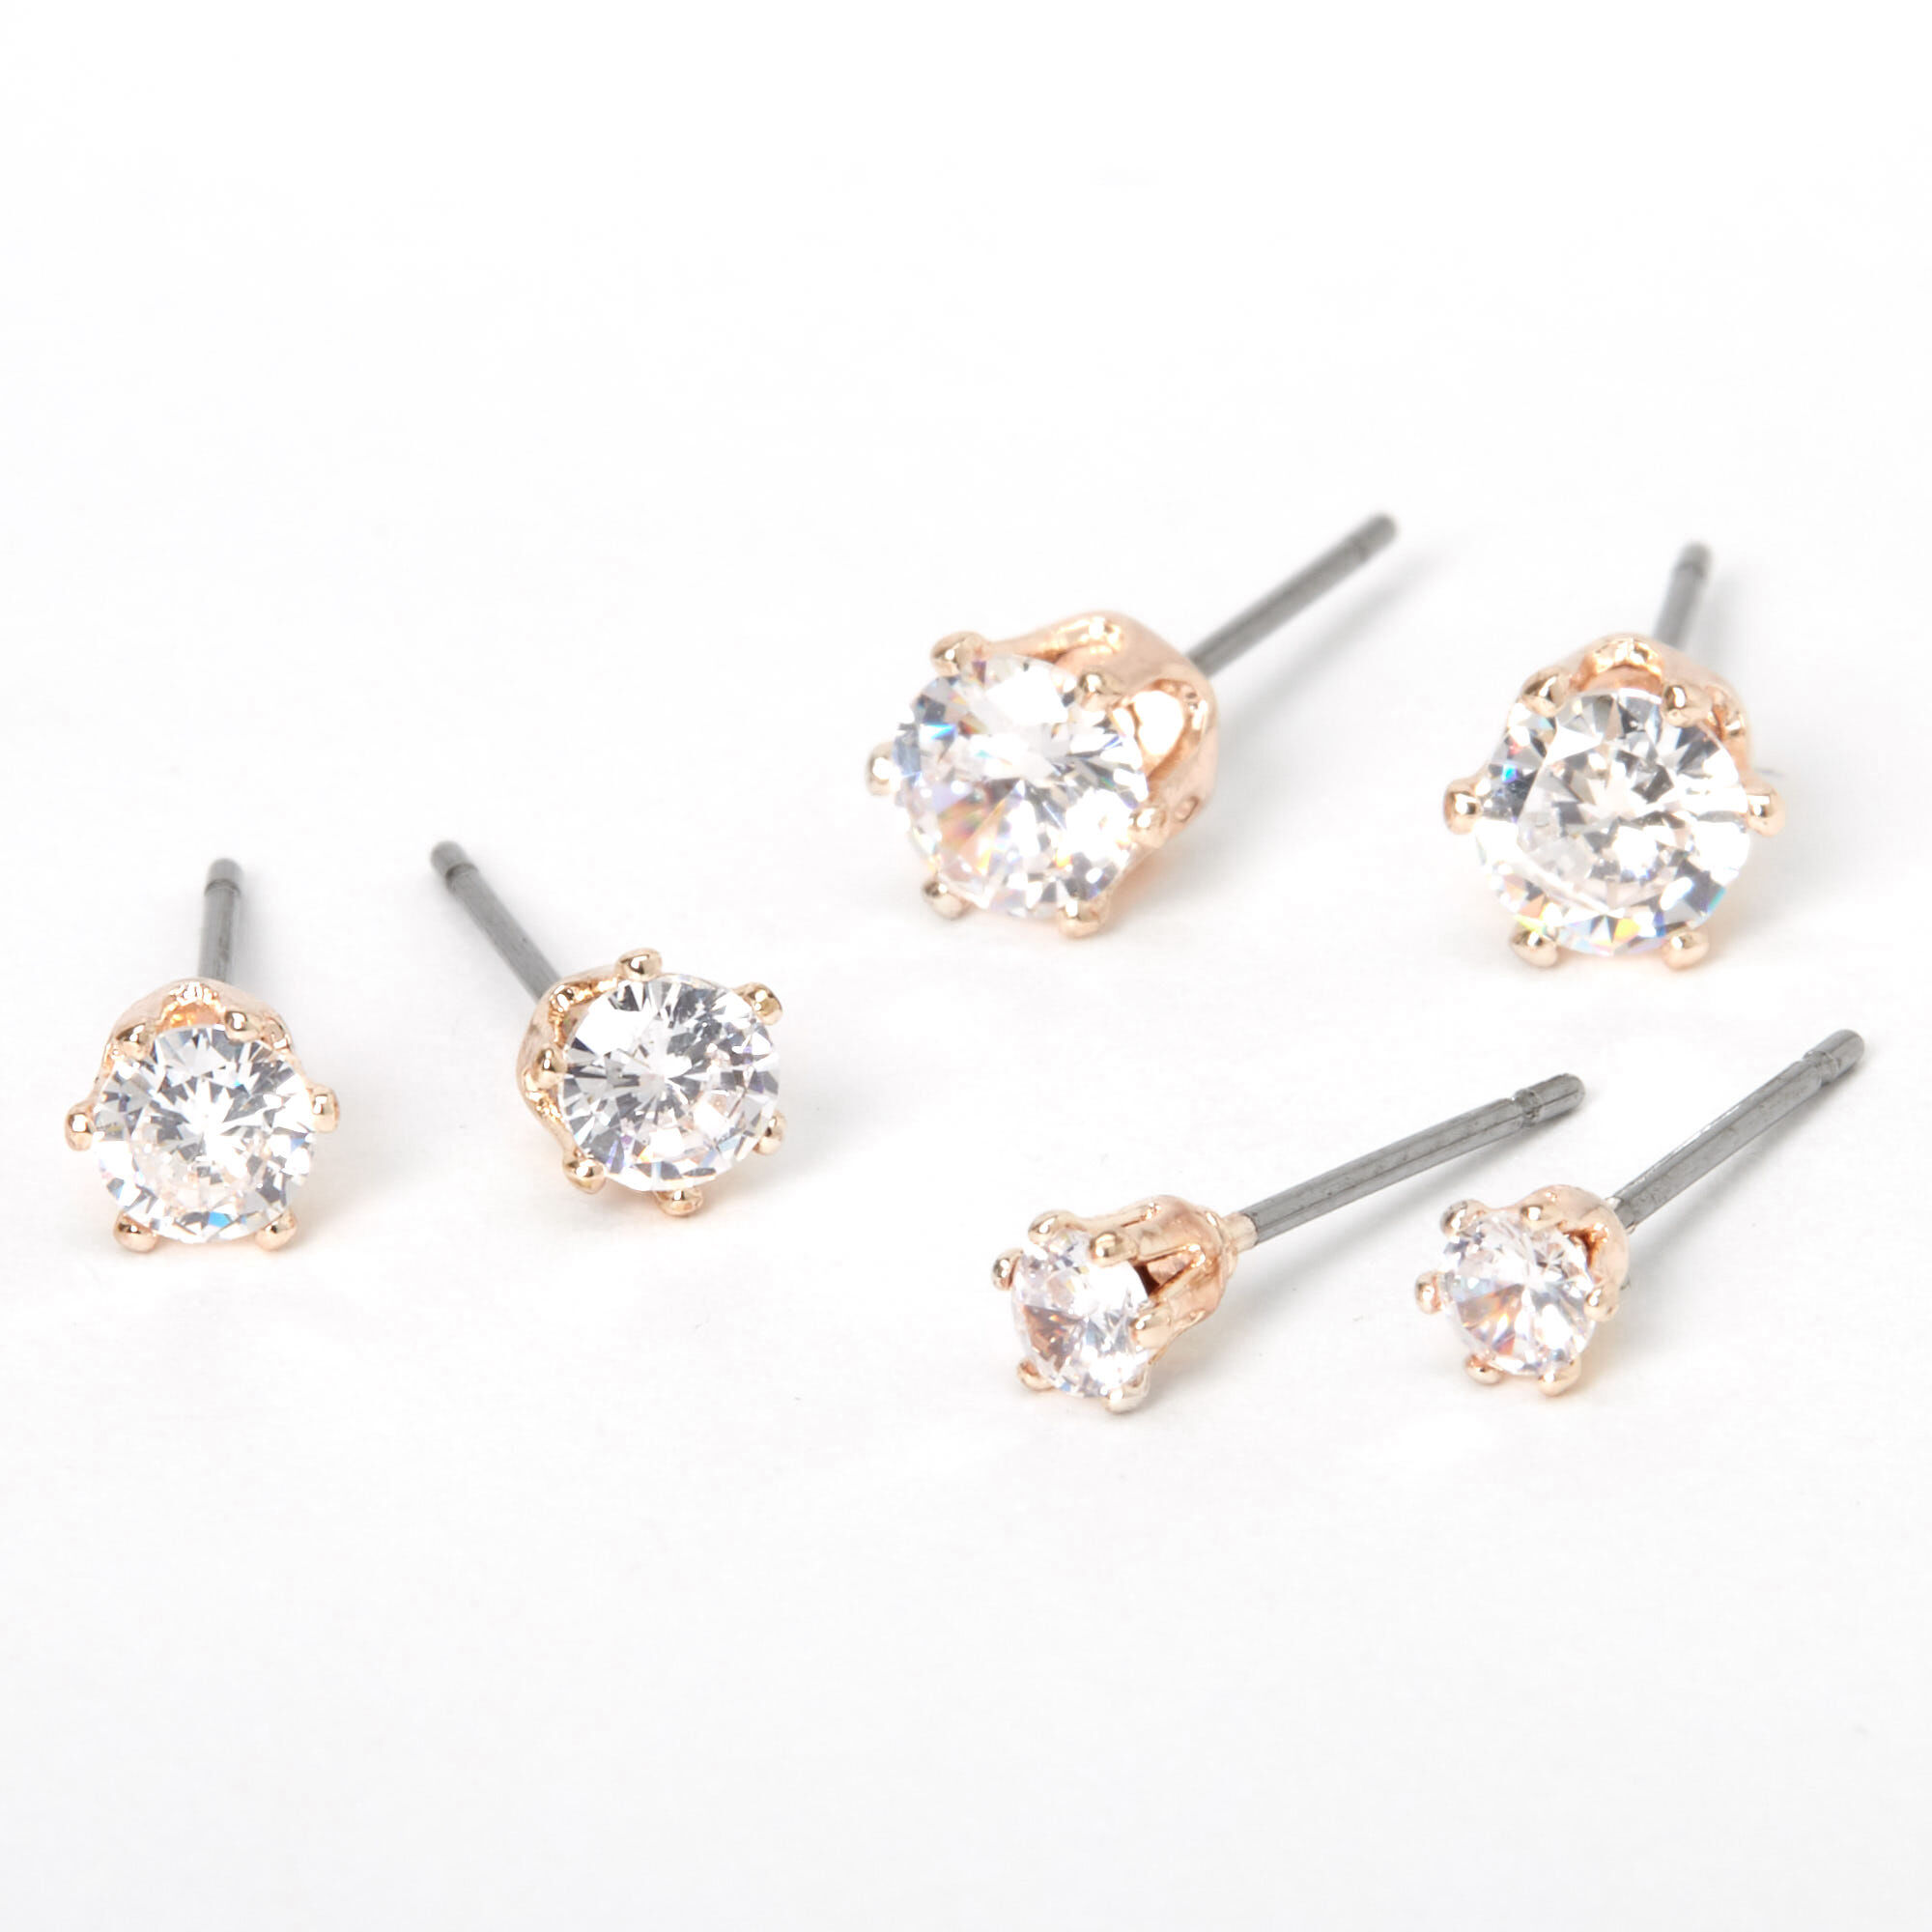 CZ White Gold Bezel Diamond Studs UK White Gold Studs April Birthstone UK C45 9ct White Gold 6mm Round Cubic Zirconia Stud Earrings